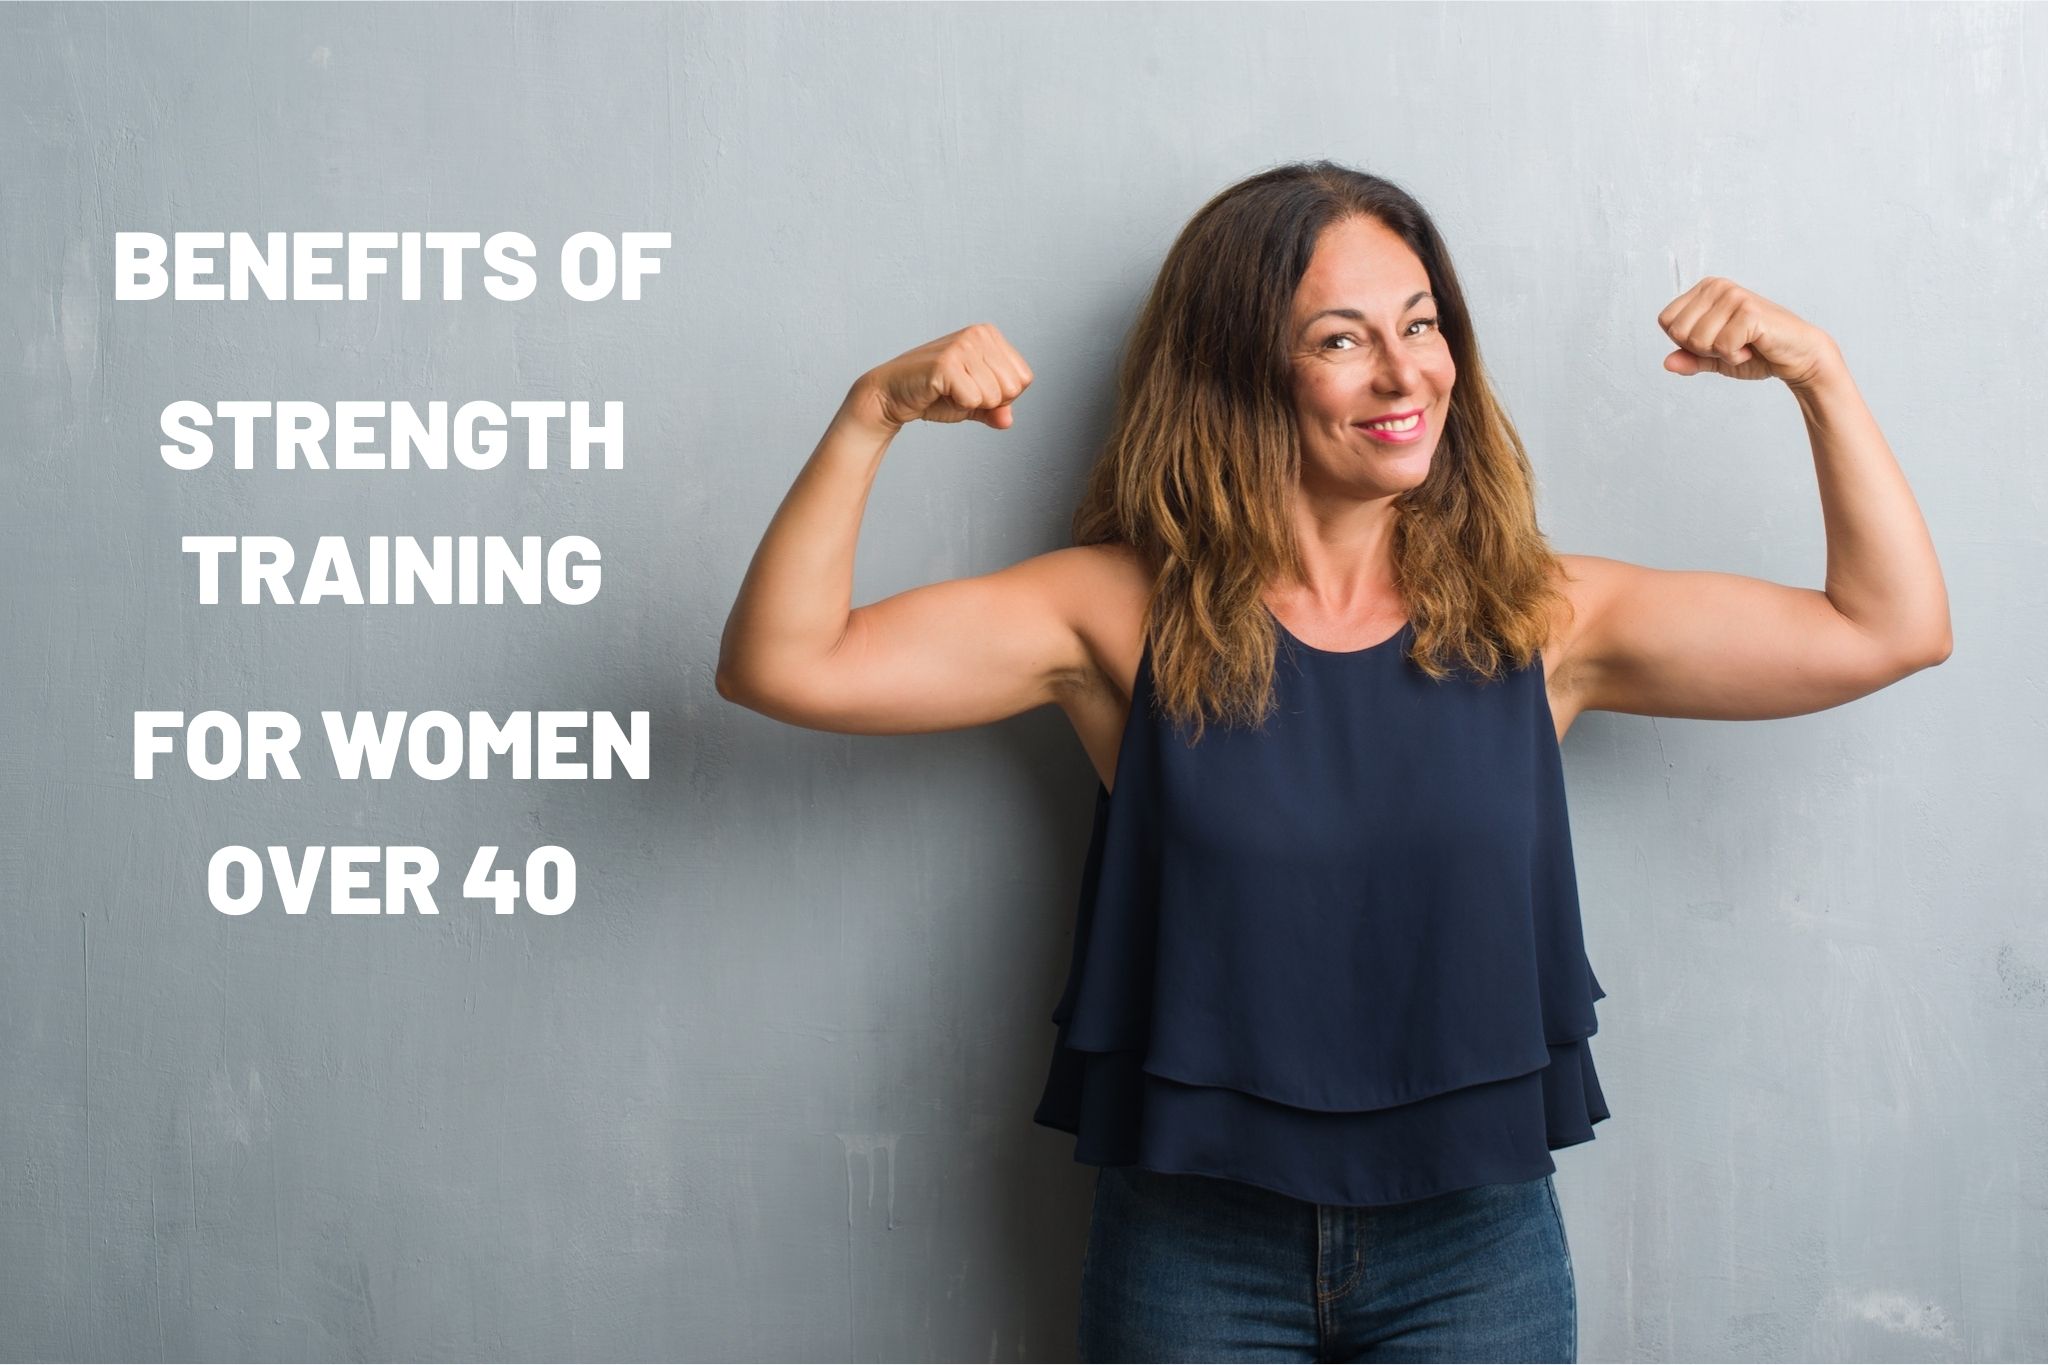 Strength Training for Women Over 40: 15 Benefits